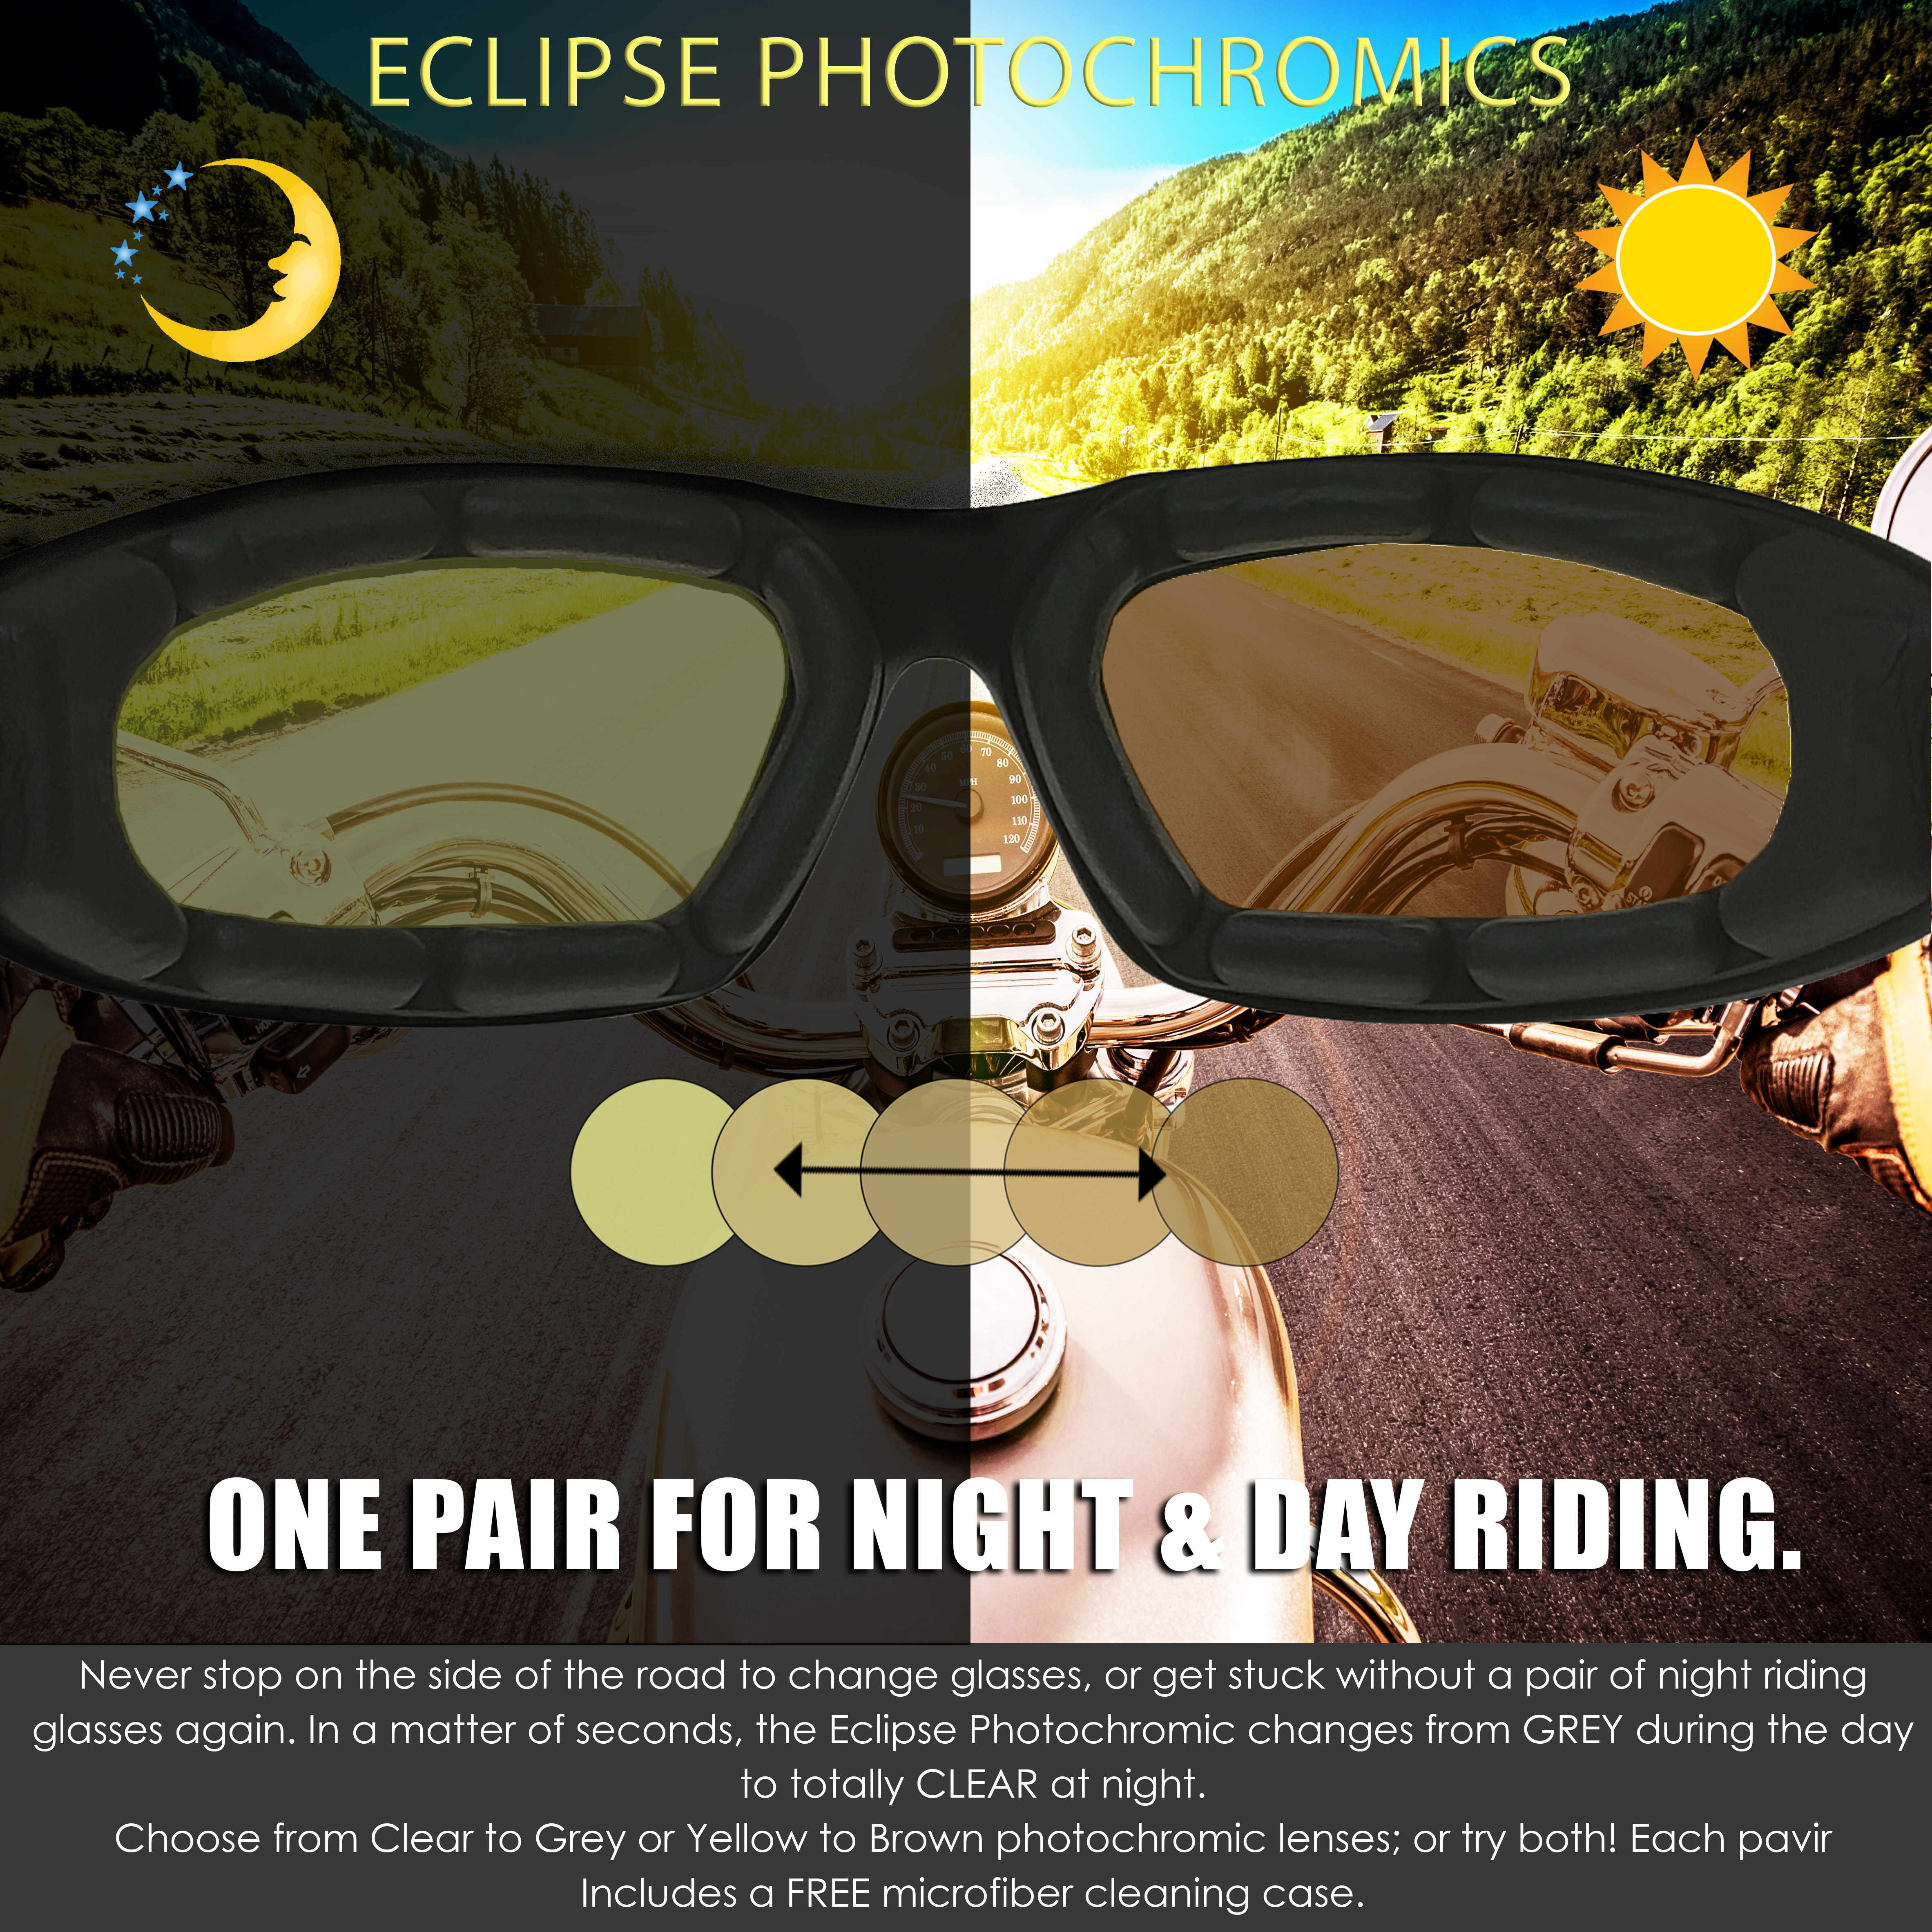 Bikershades Motorcycle Transitional Sunglass Day Night Riding Photochromic Pink Yellow - image 5 of 6